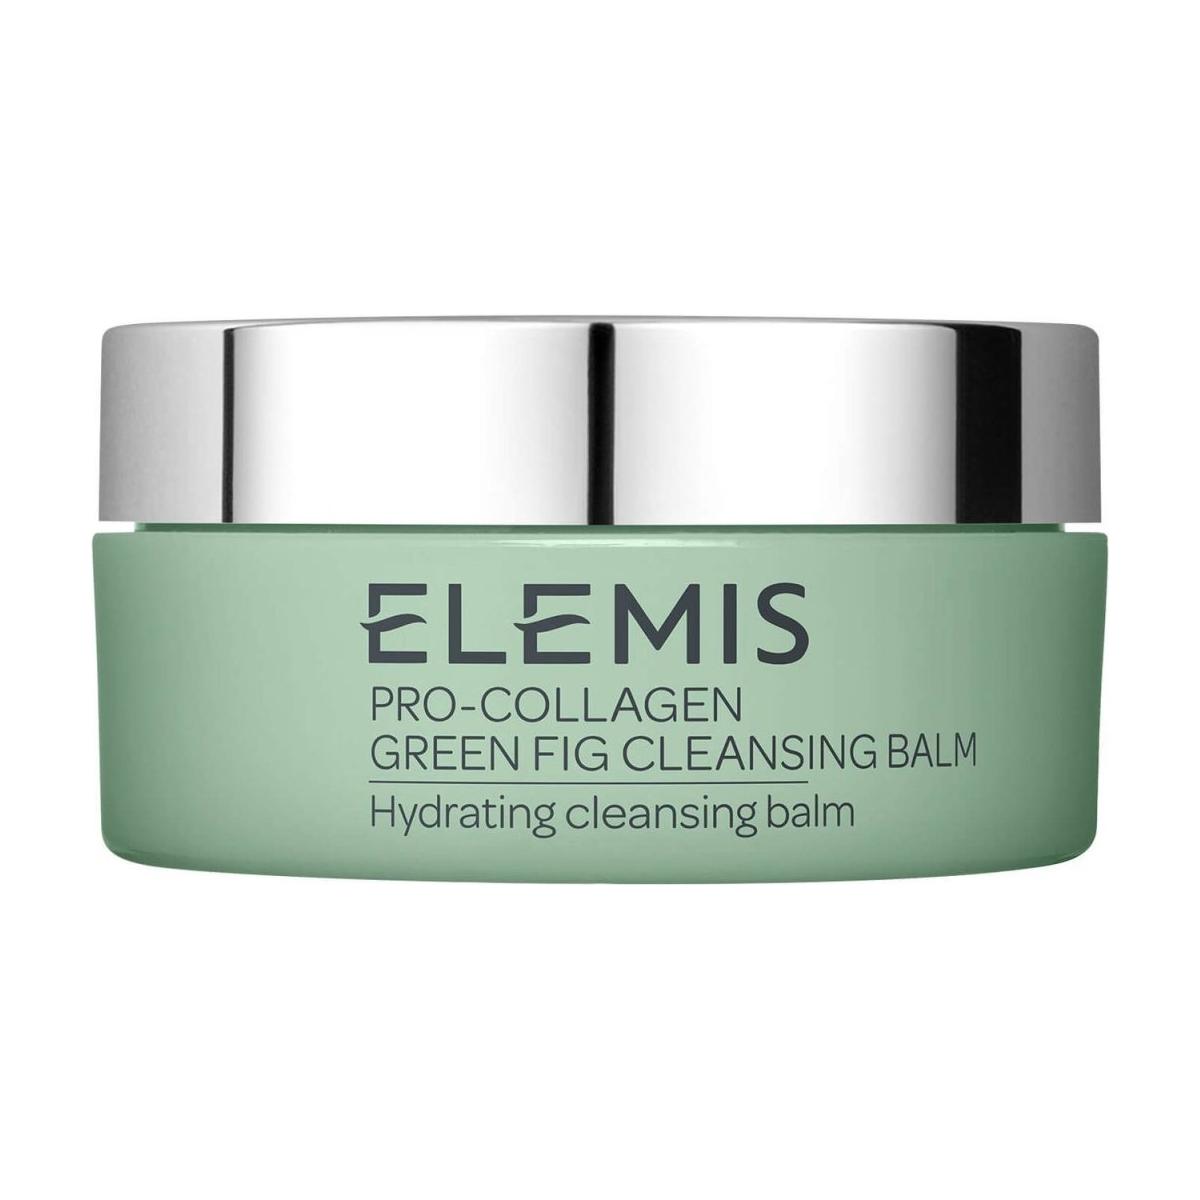 ELEMIS Pro-Collagen Green Fig Cleansing Balm 100g - DG International Ventures Limited